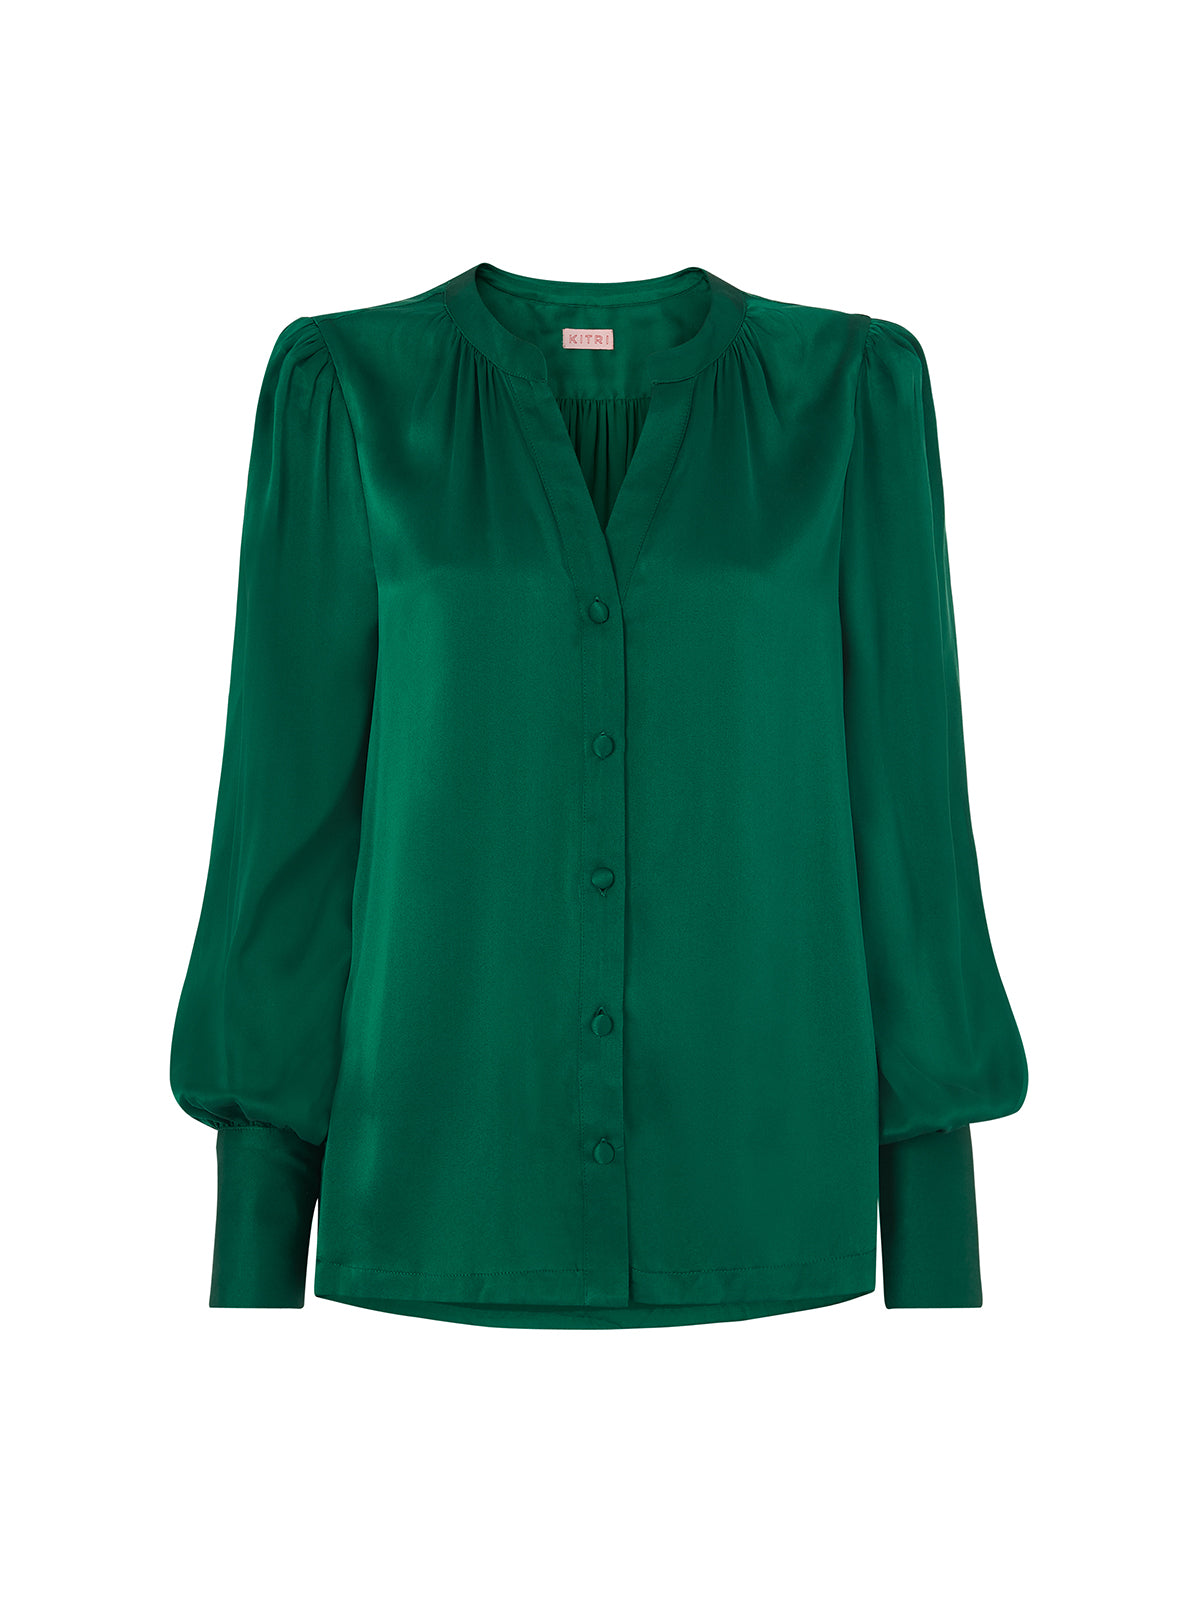 green blouse